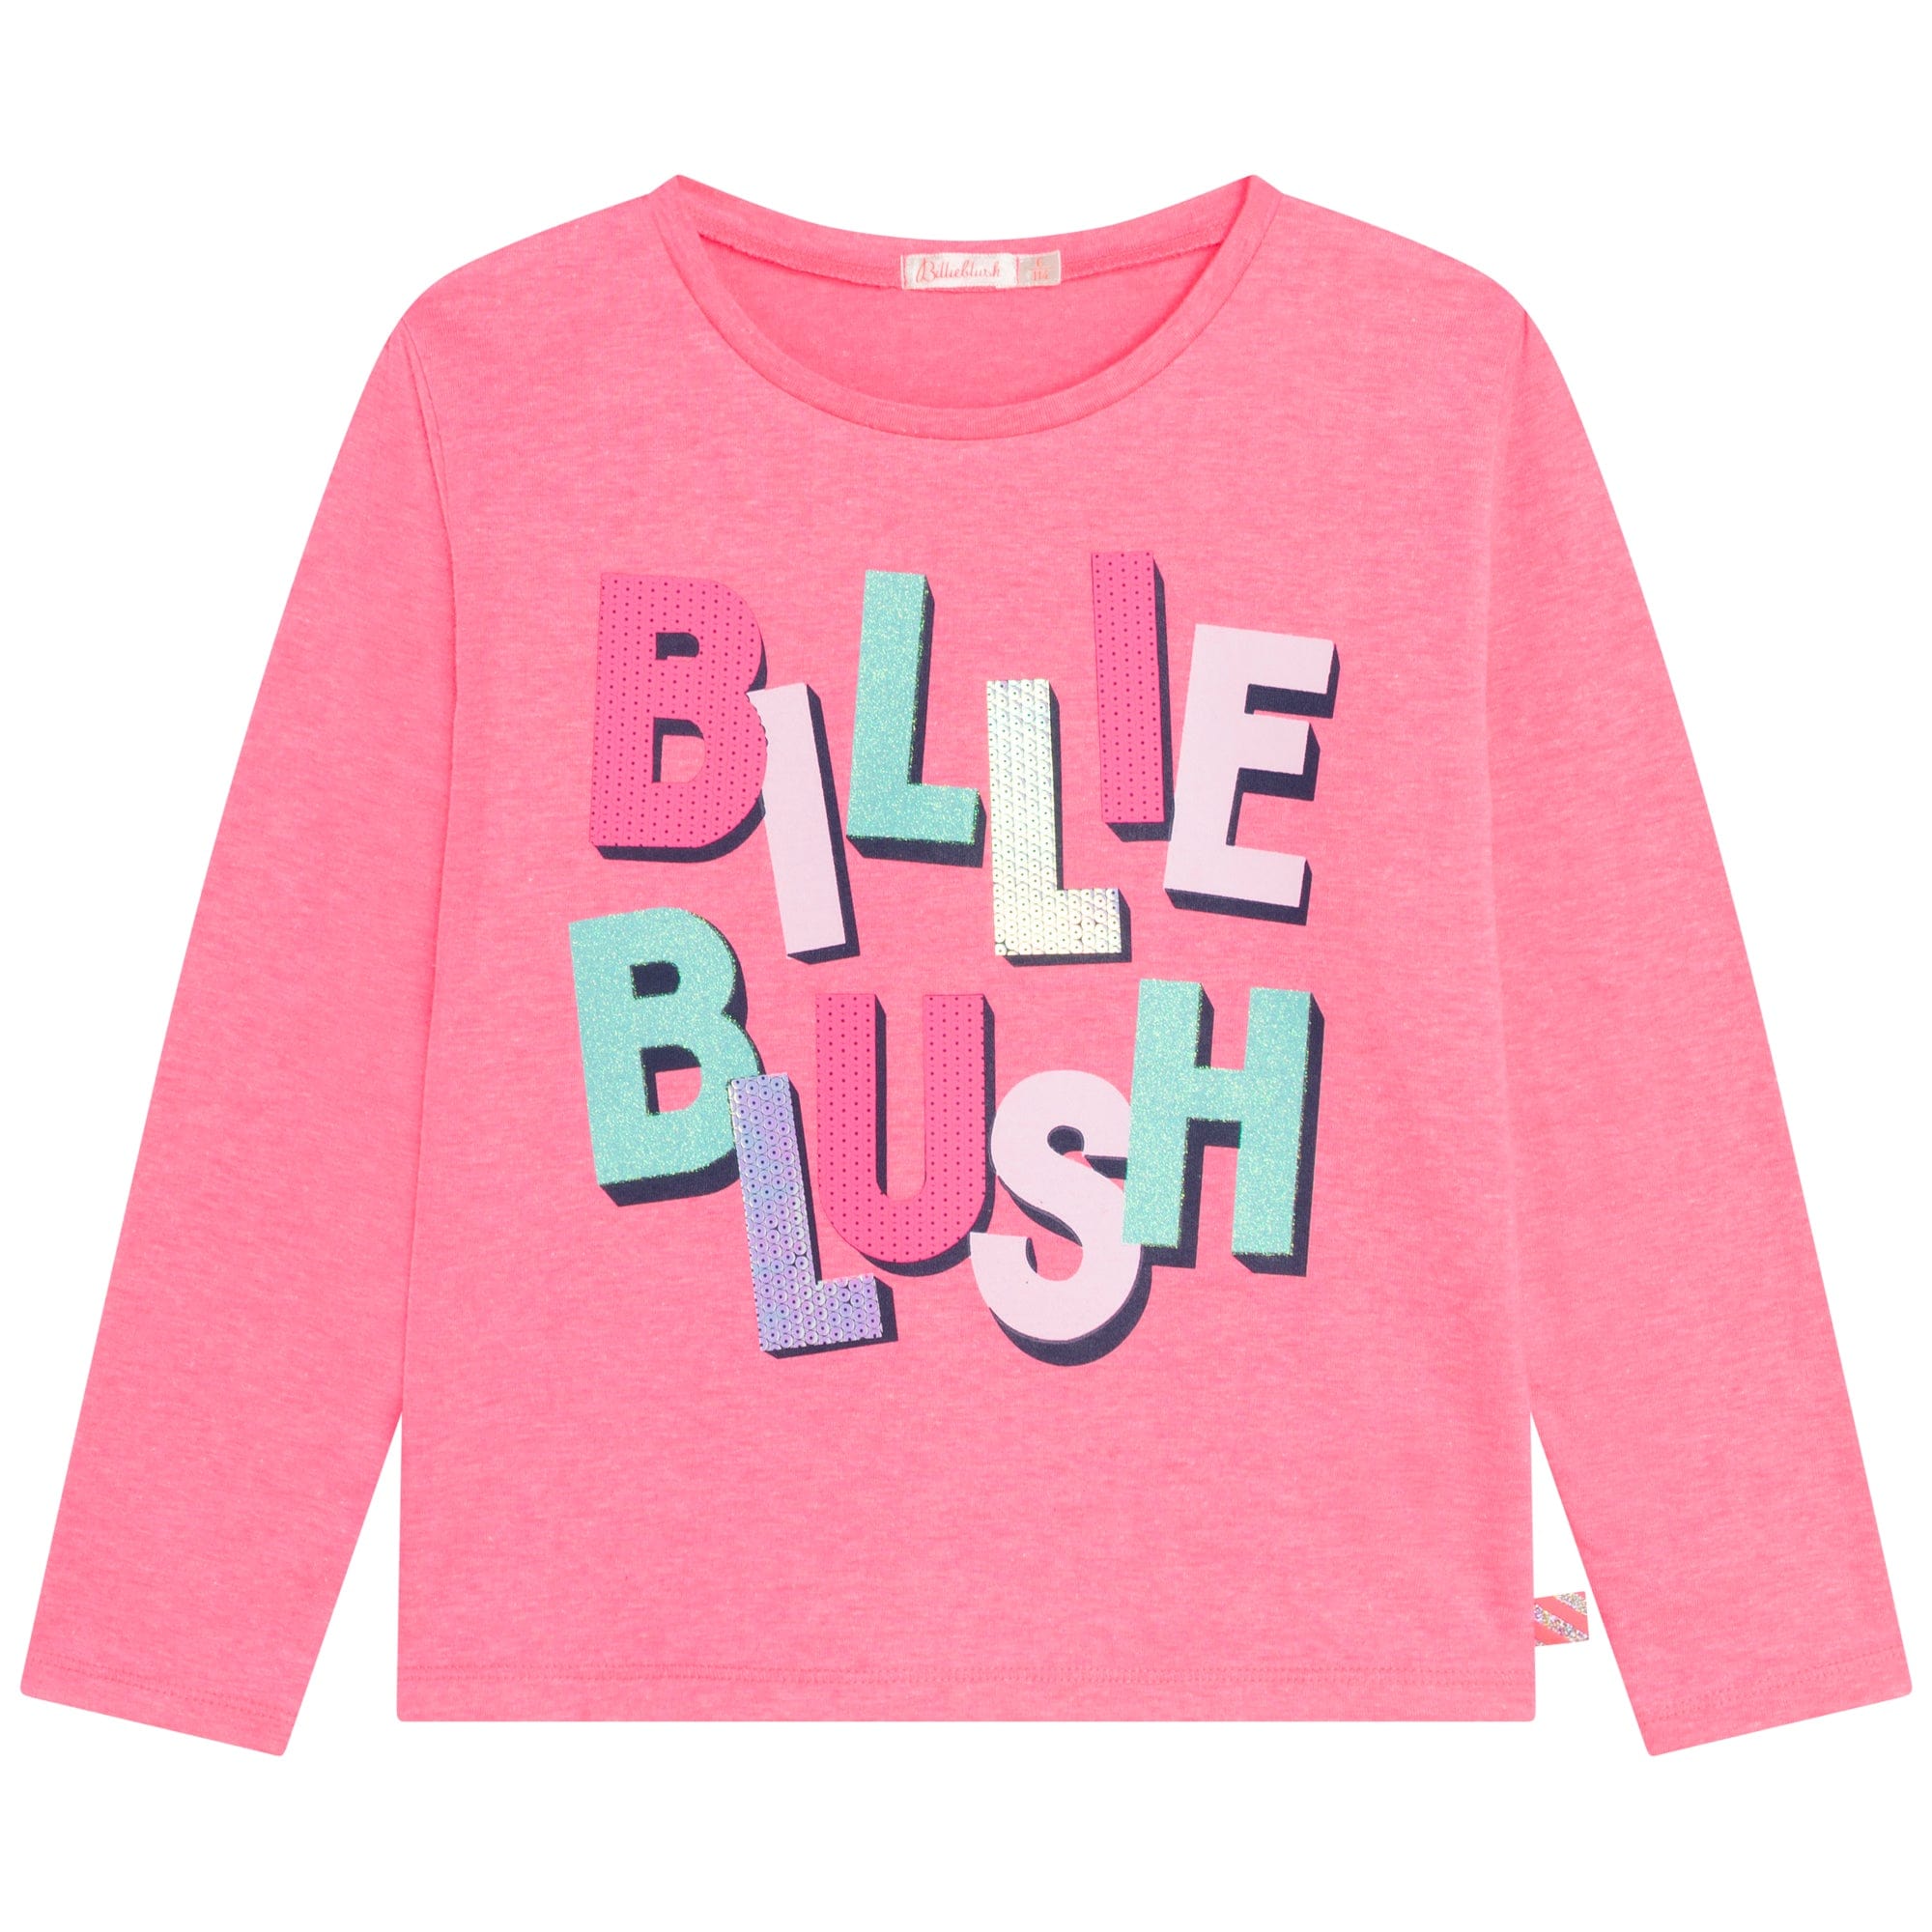 BILLIEBLUSH - Billieblush Top & Jean Set - Pink